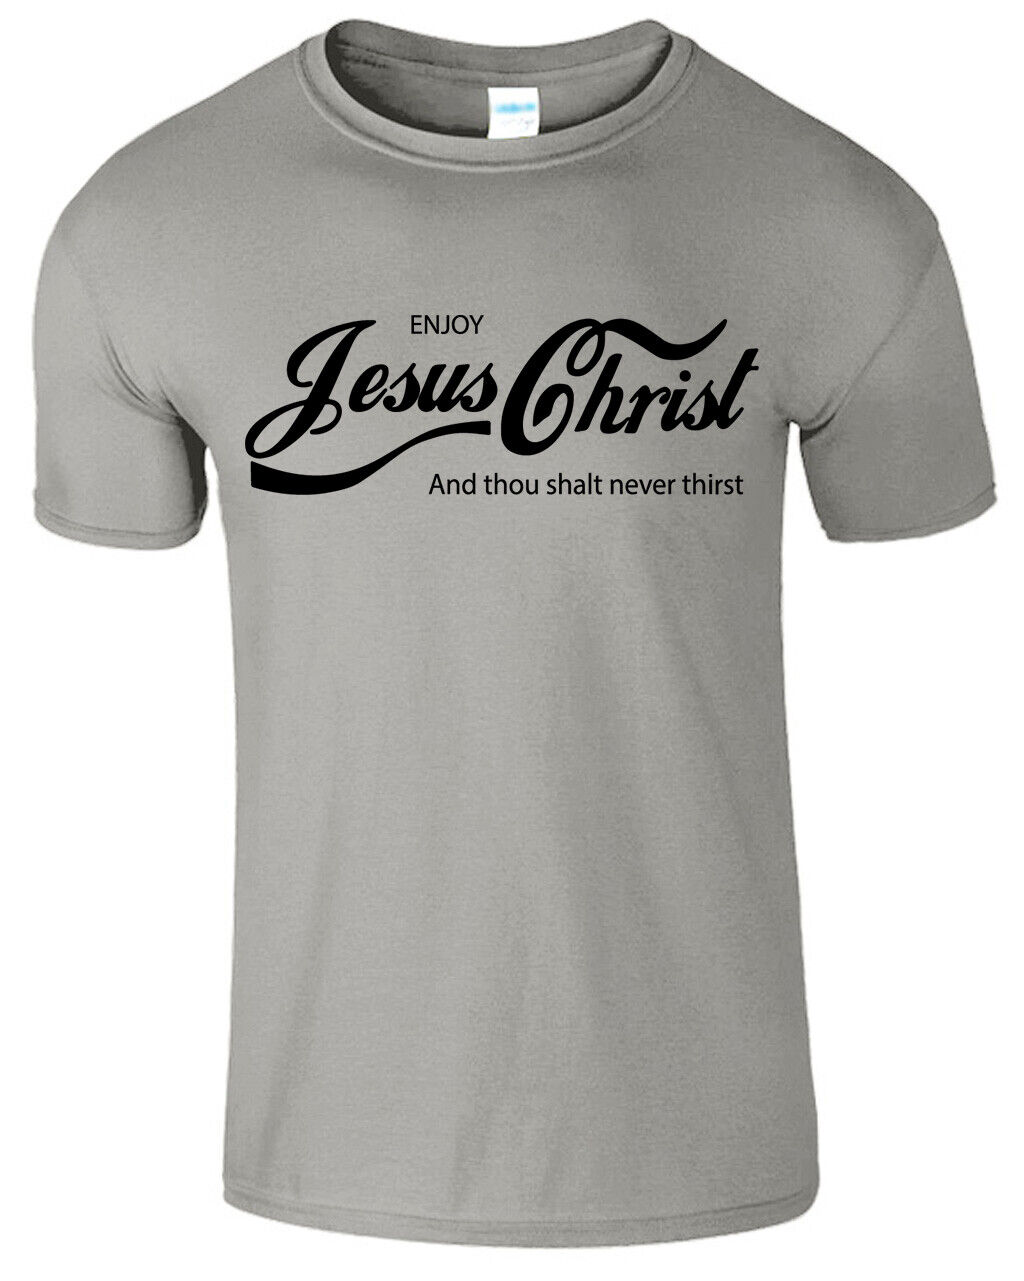 Jesus Christ Mens T-Shirt Happy Easter Funny Gift Christian Religious Cross Tee